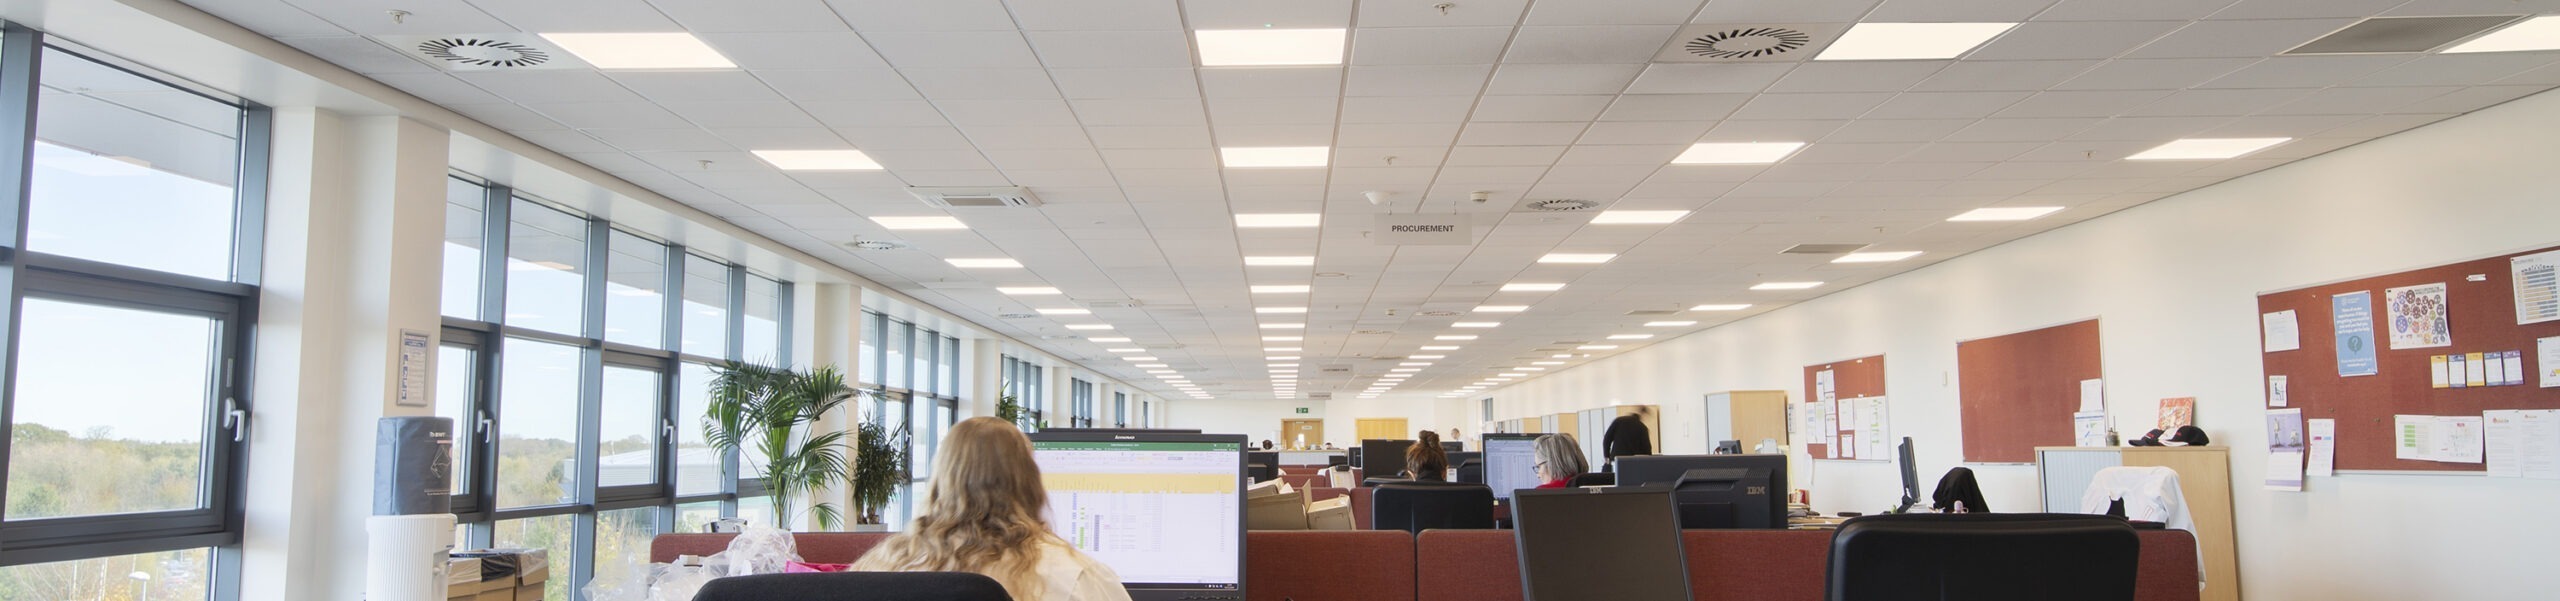 Tamlite Honda Logistics Swindon office LED lighting case study header